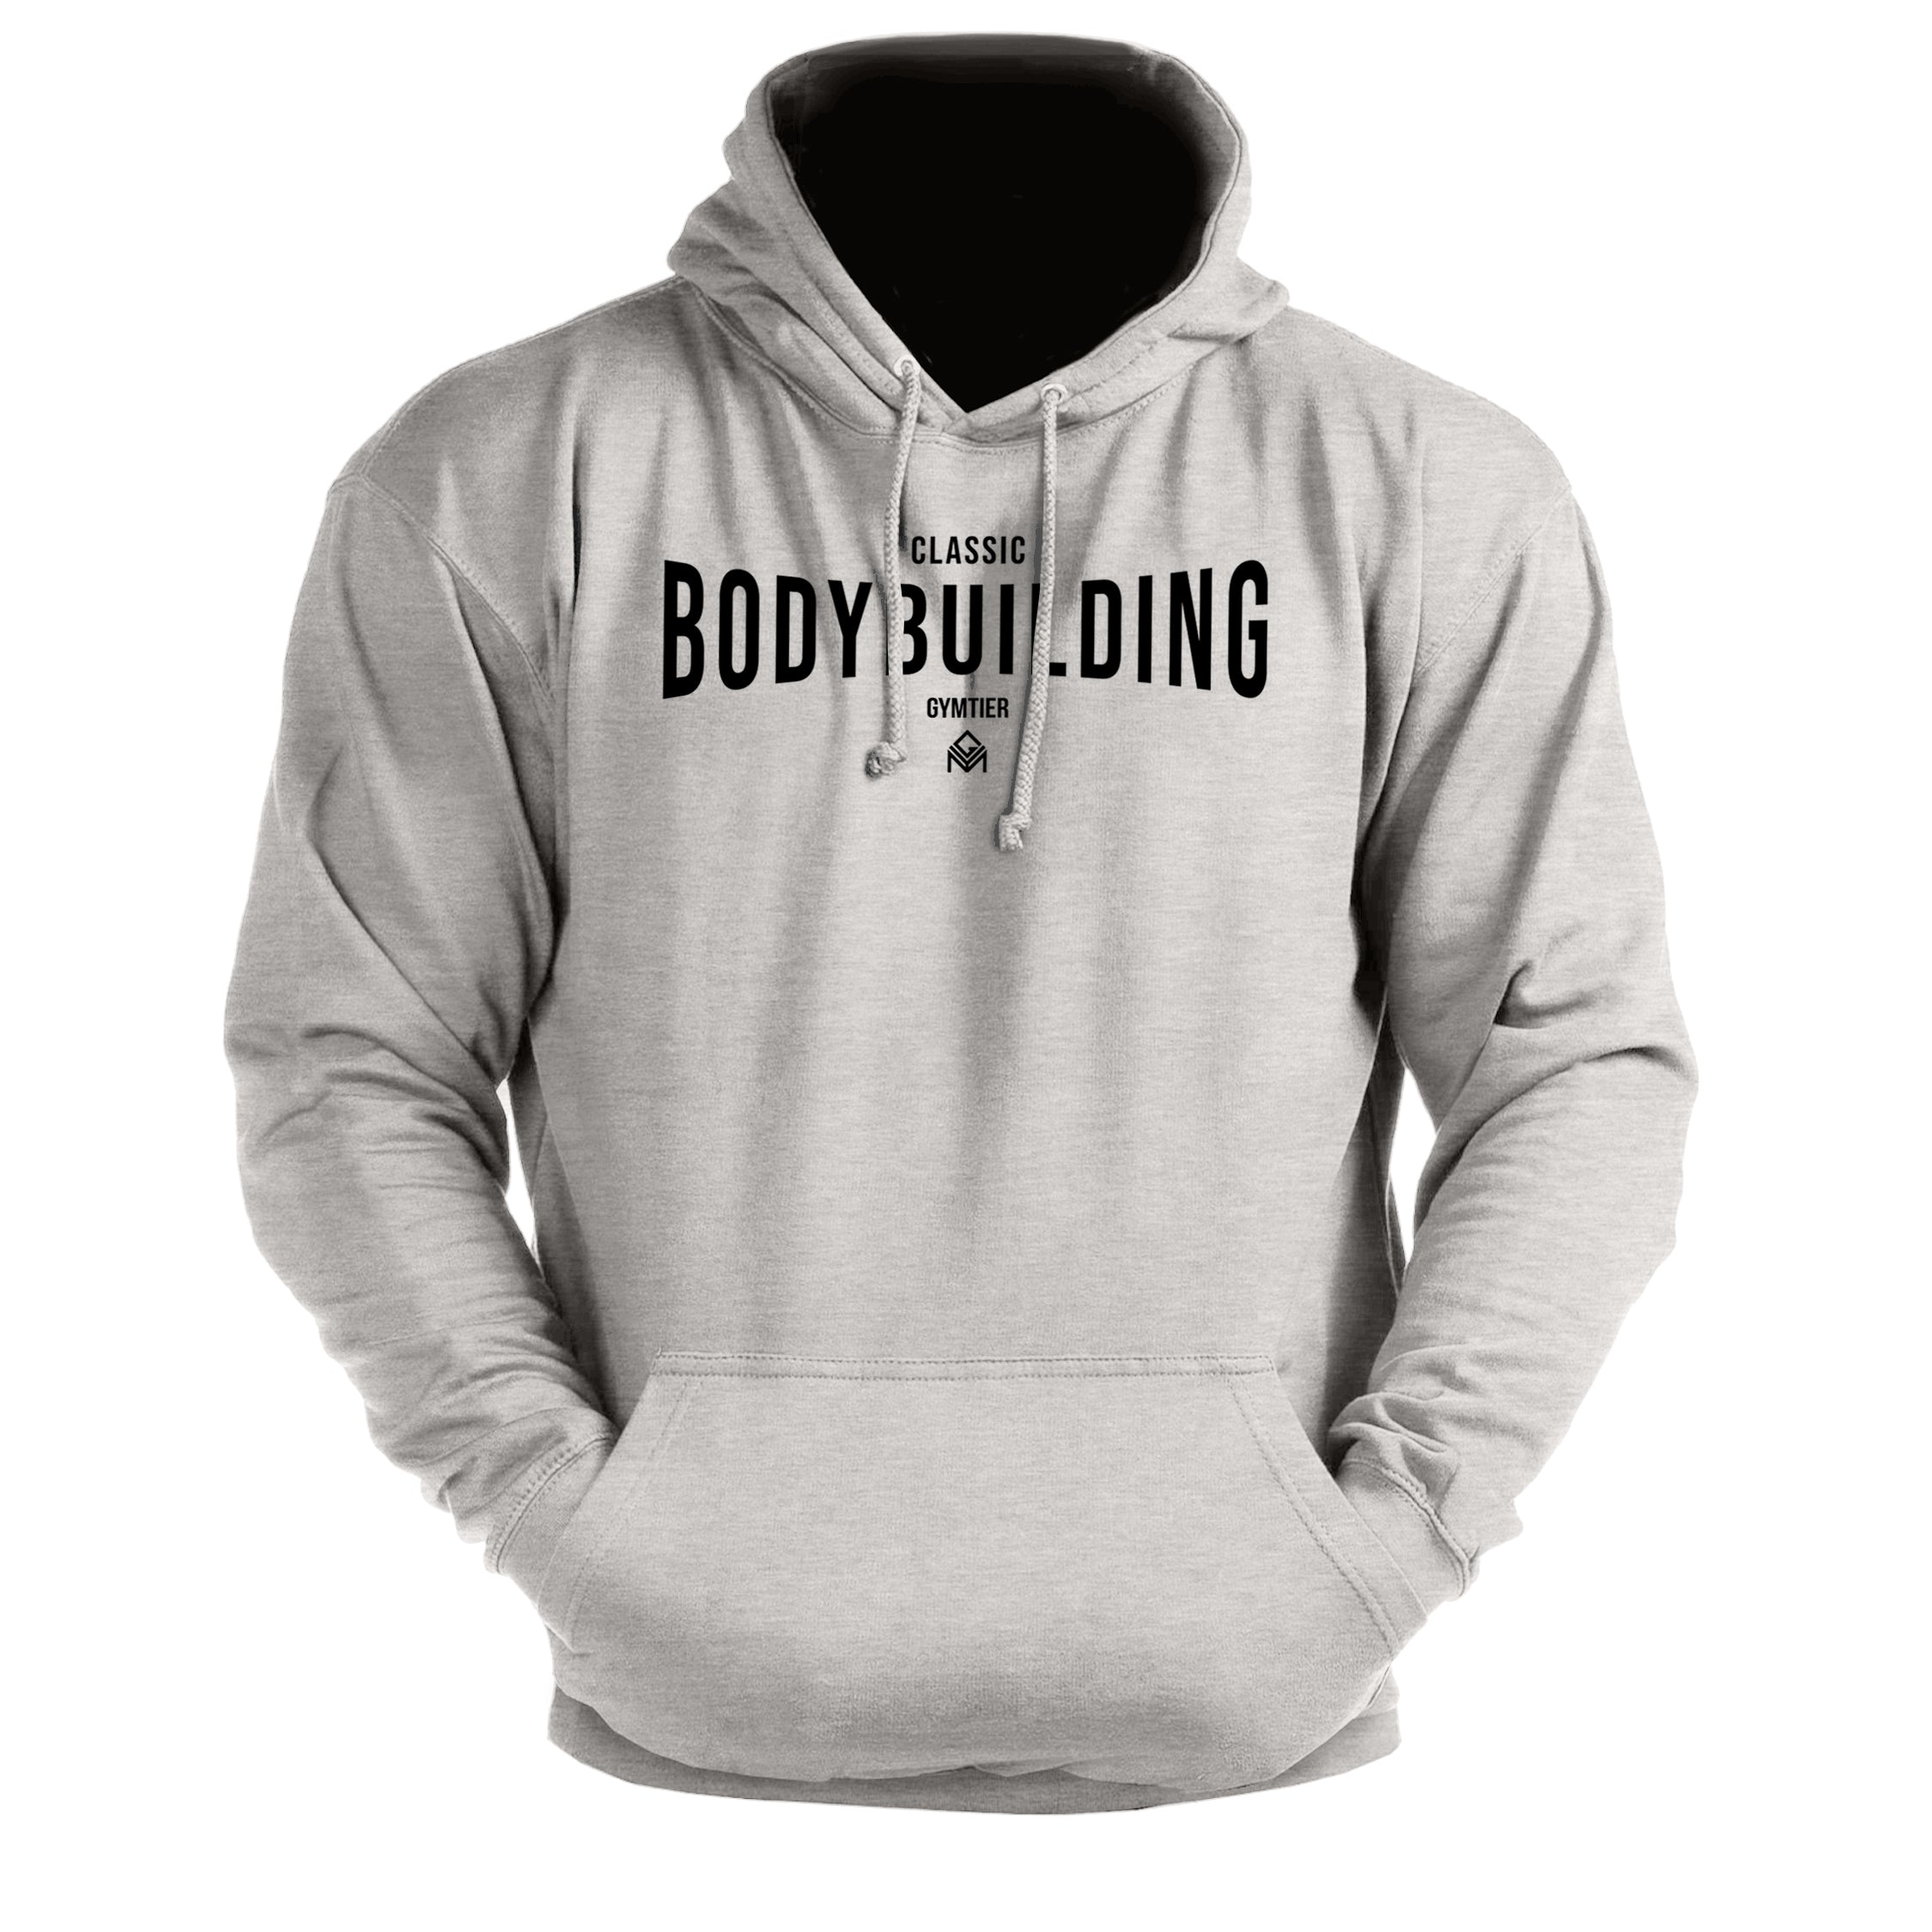 Classic Bodybuilding - Gym Hoodie